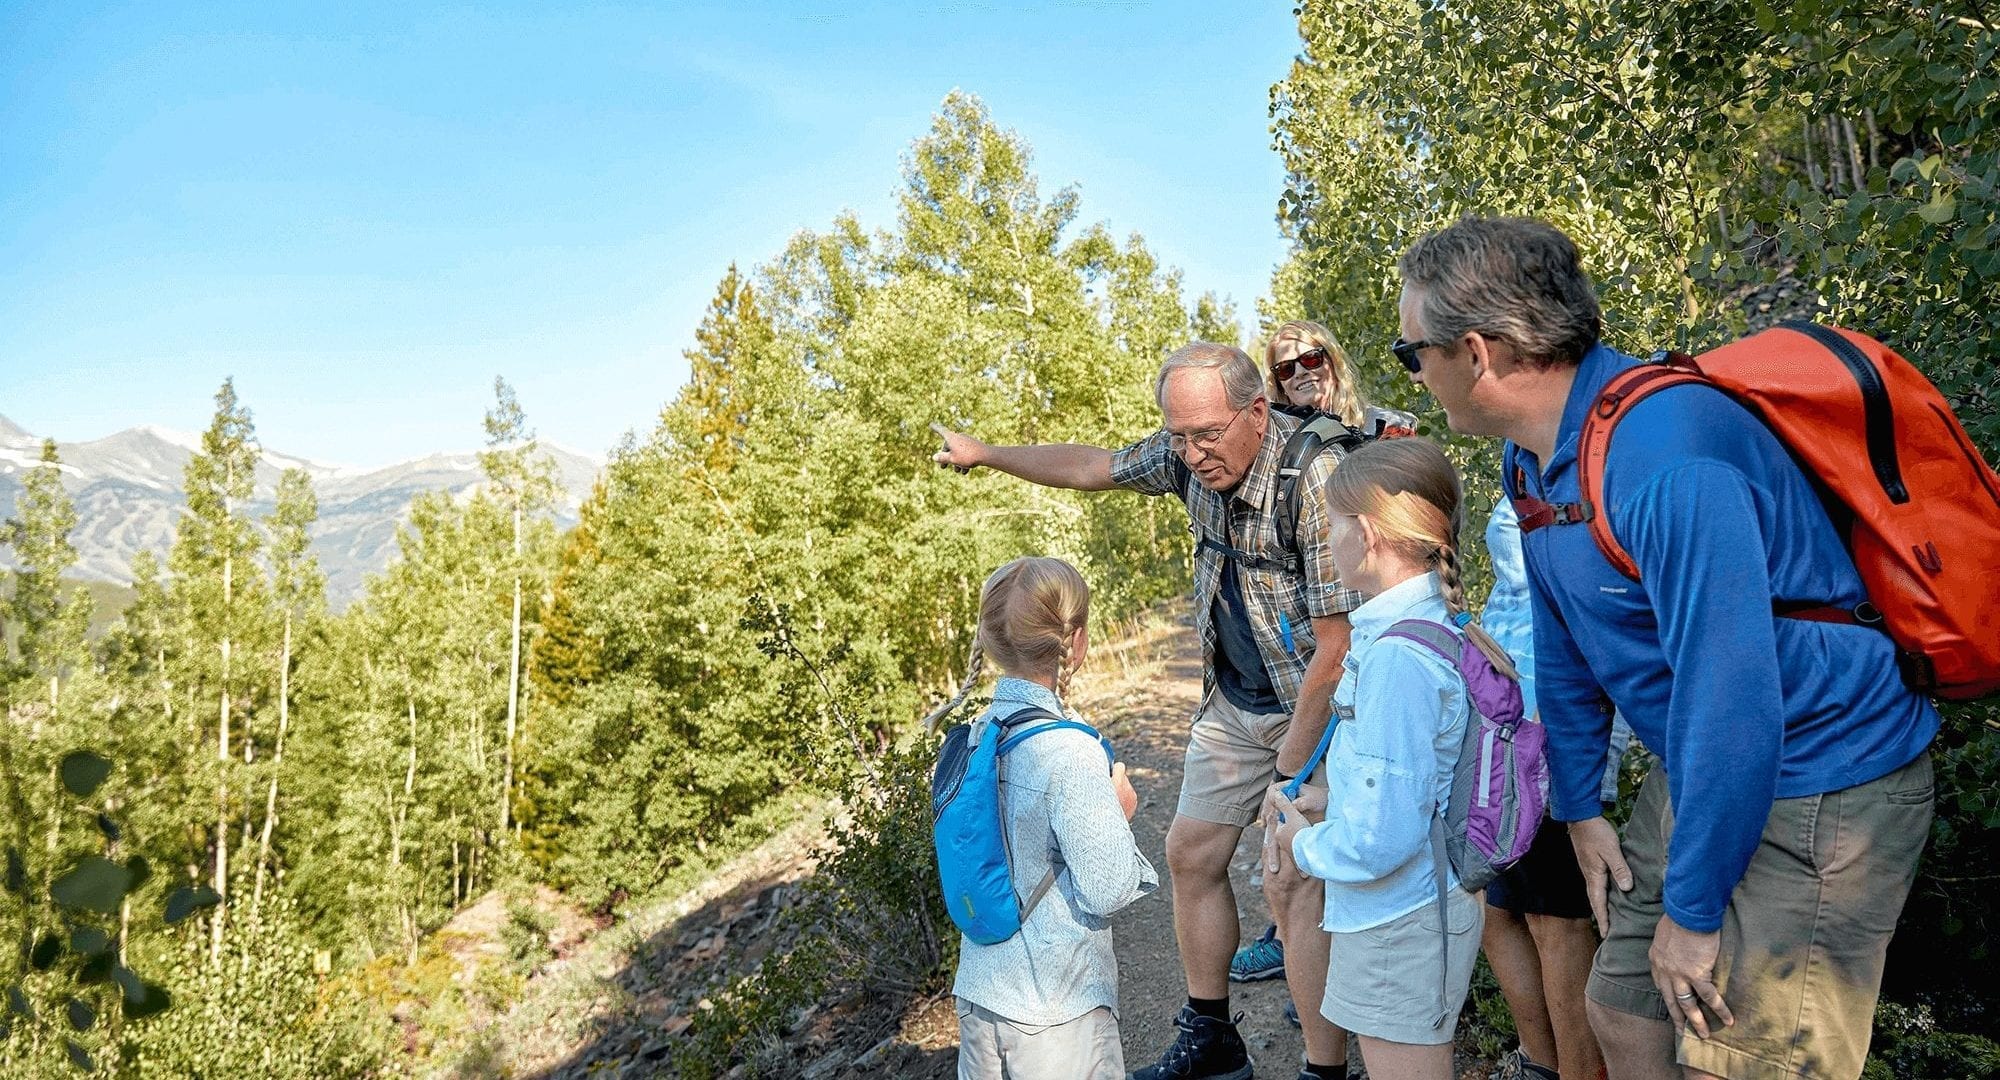 Family Hiking in Breckenridge Colorado with grandpa pointing to Breckenridge Ski Resort.